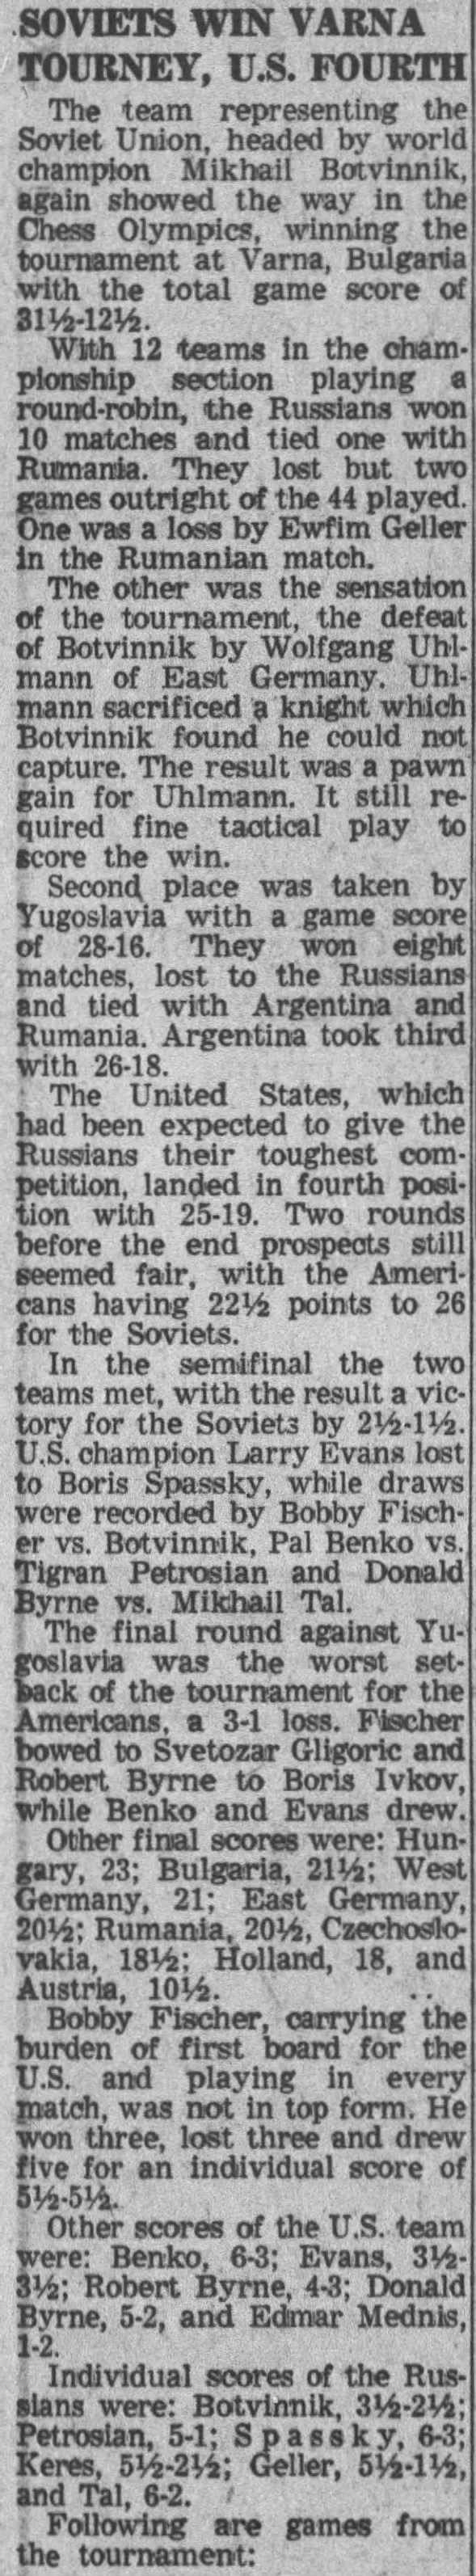 Soviets Win Varna Tourney; U.S. Fourth